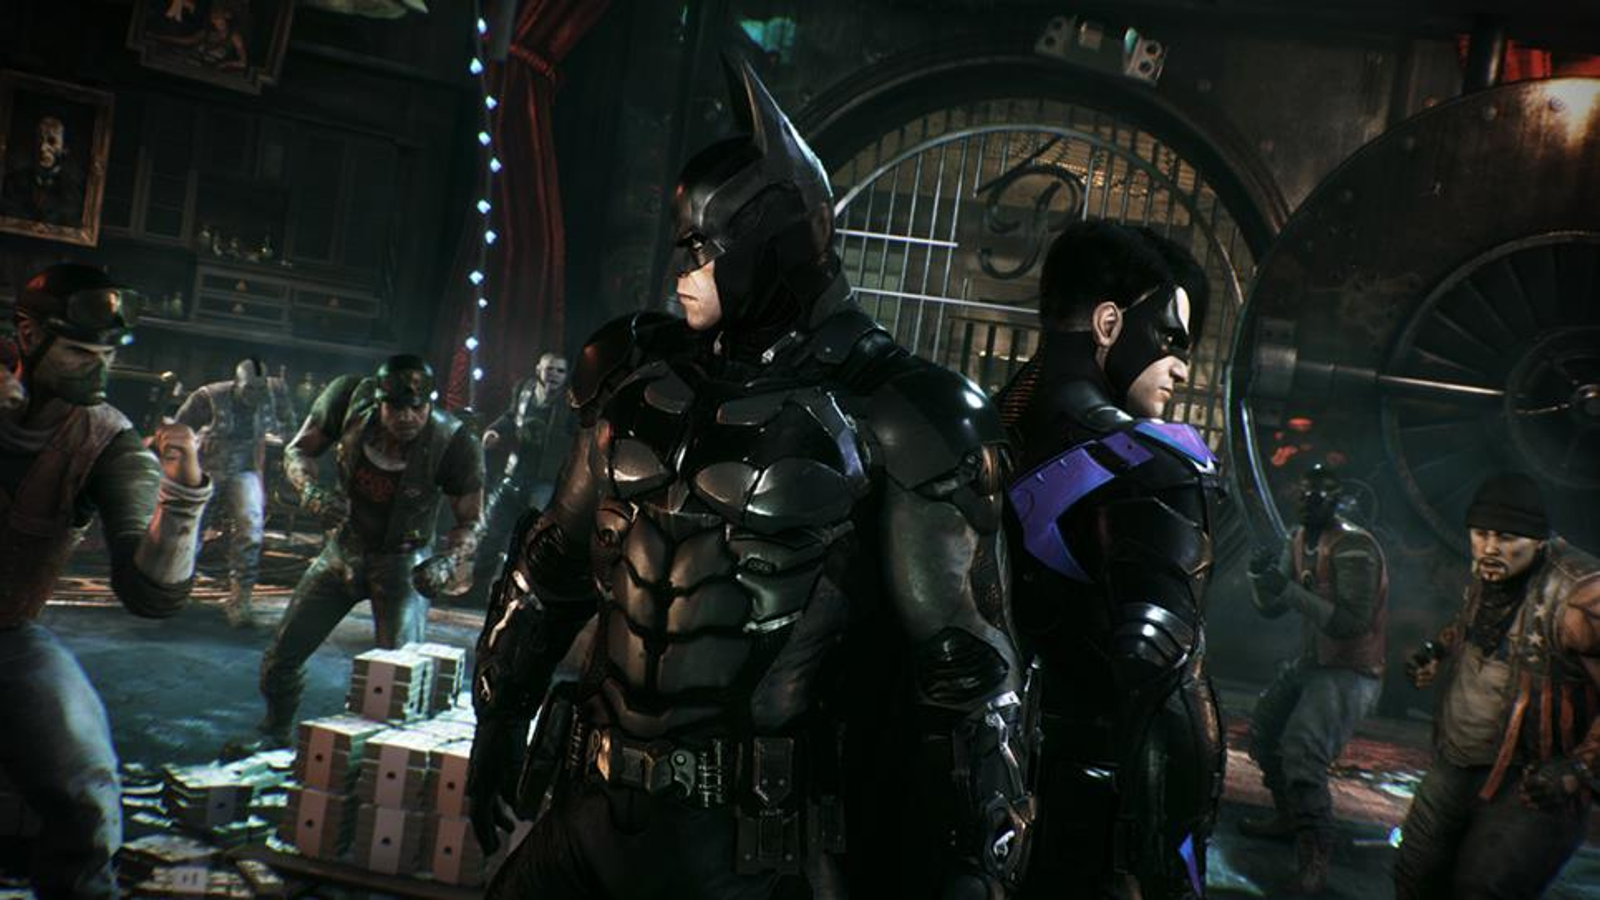 Batman: Arkham City - DLC - Trophies, Looks like there will…